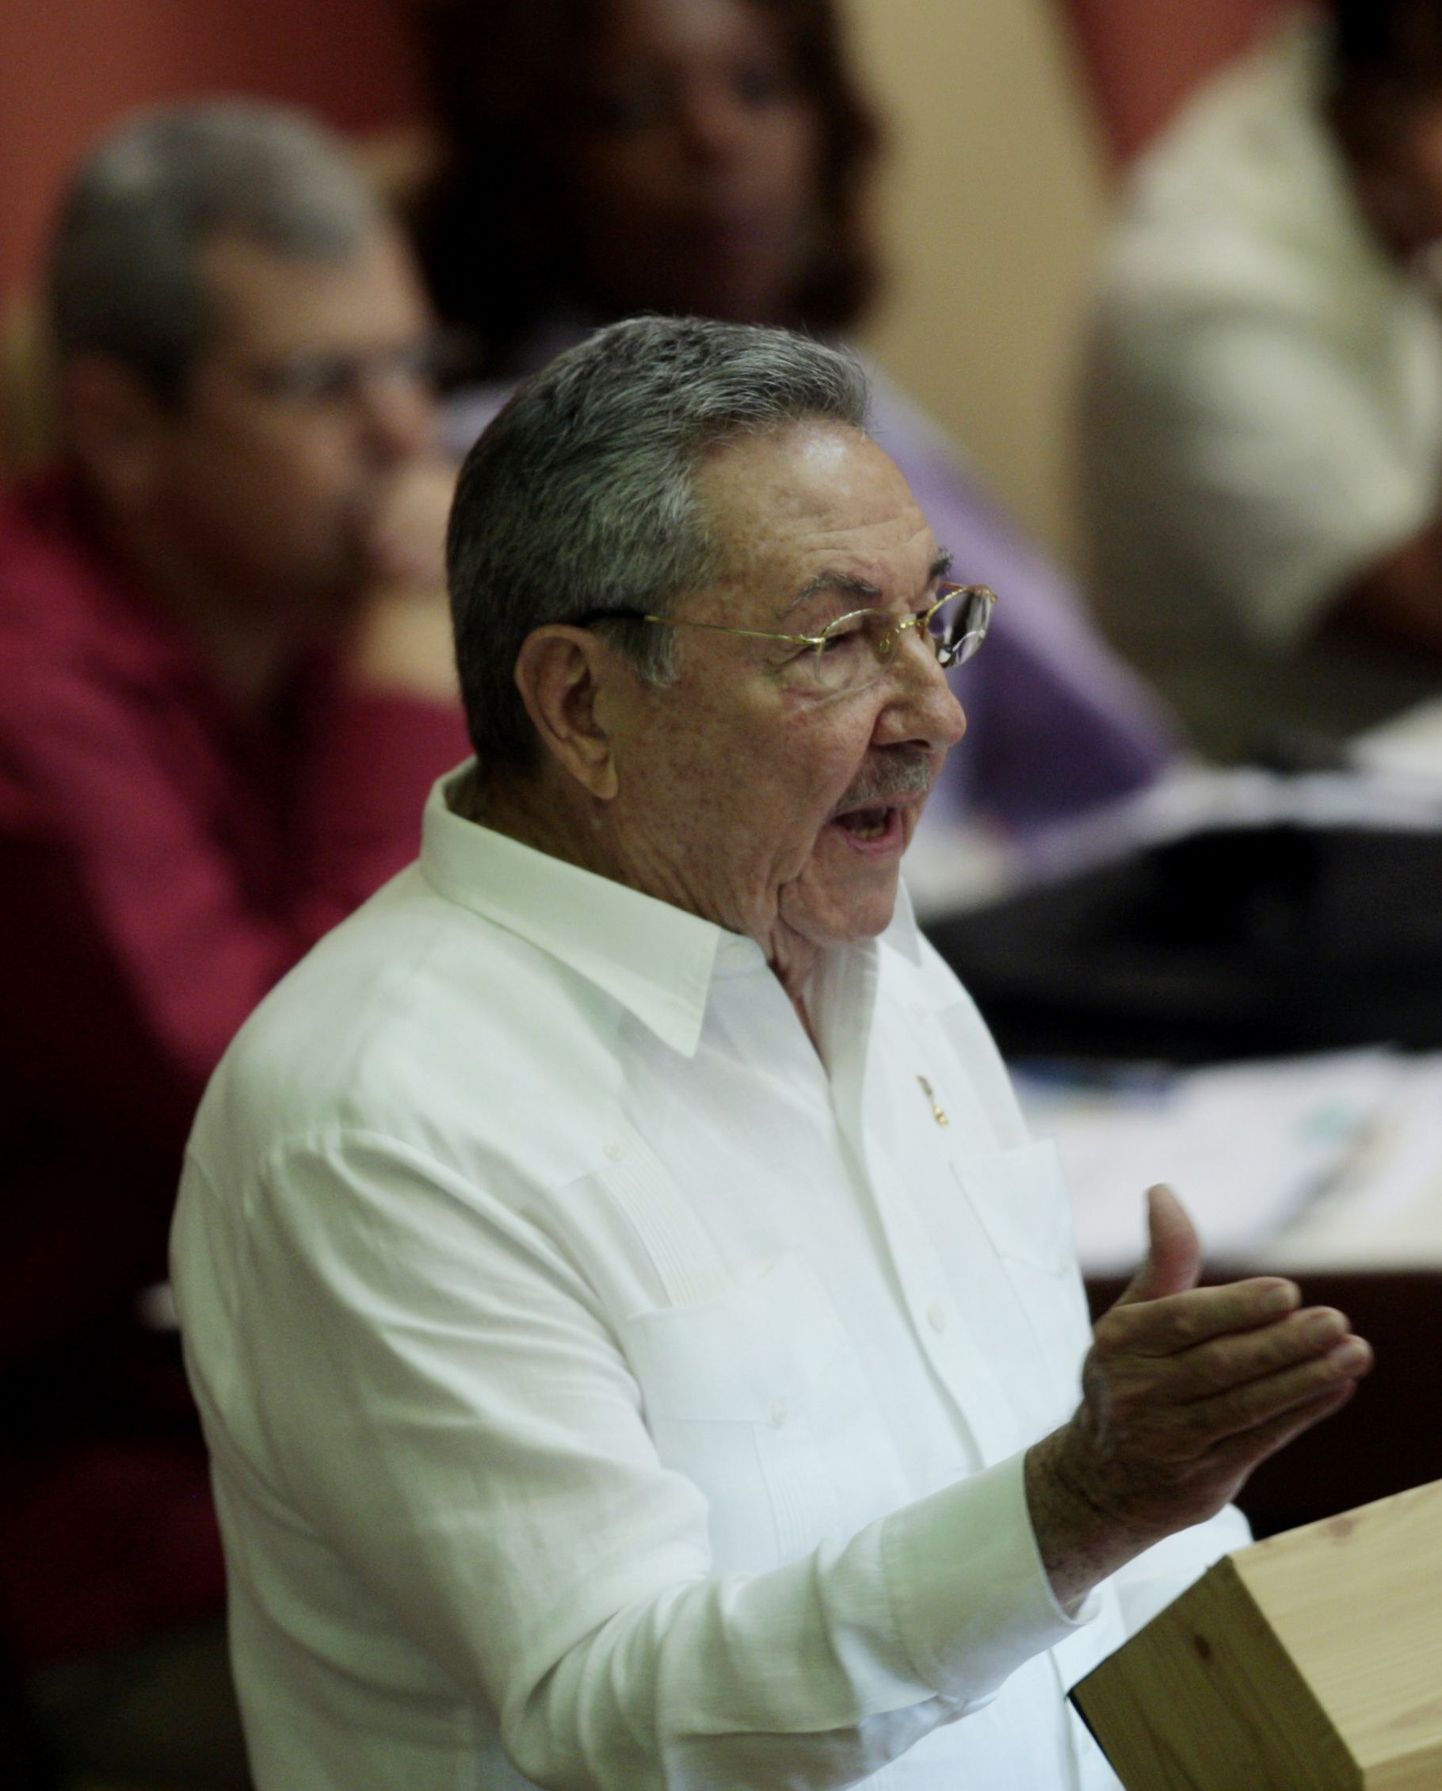 Kuuba president Raúl Castro eile parlamendi ees kõnet pidamas.